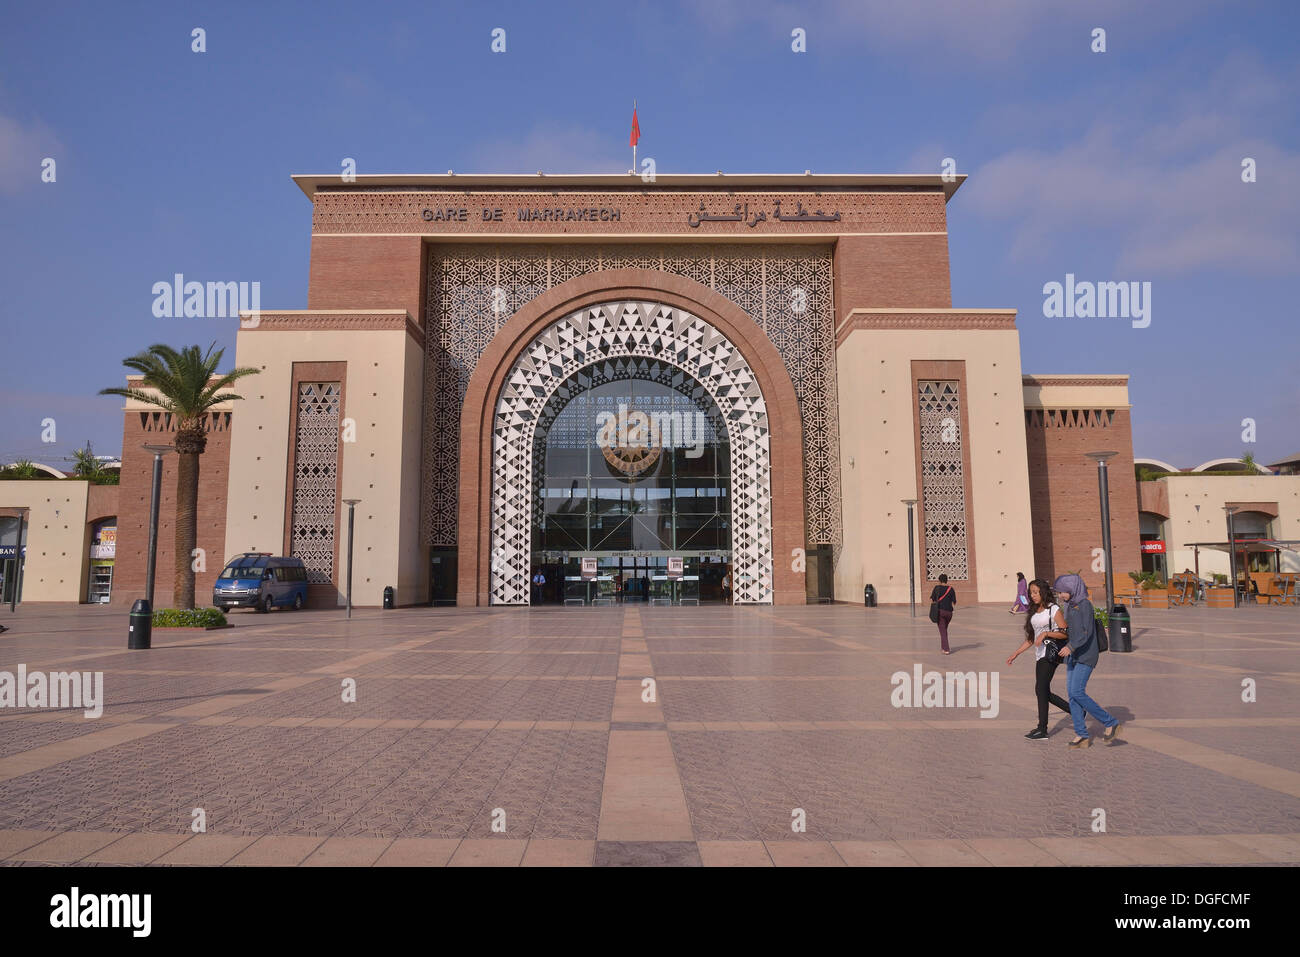 Gare de Marrakech, railway station, Marrakesh, Marrakesh-Tensift-El Haouz region, Morocco Stock Photo